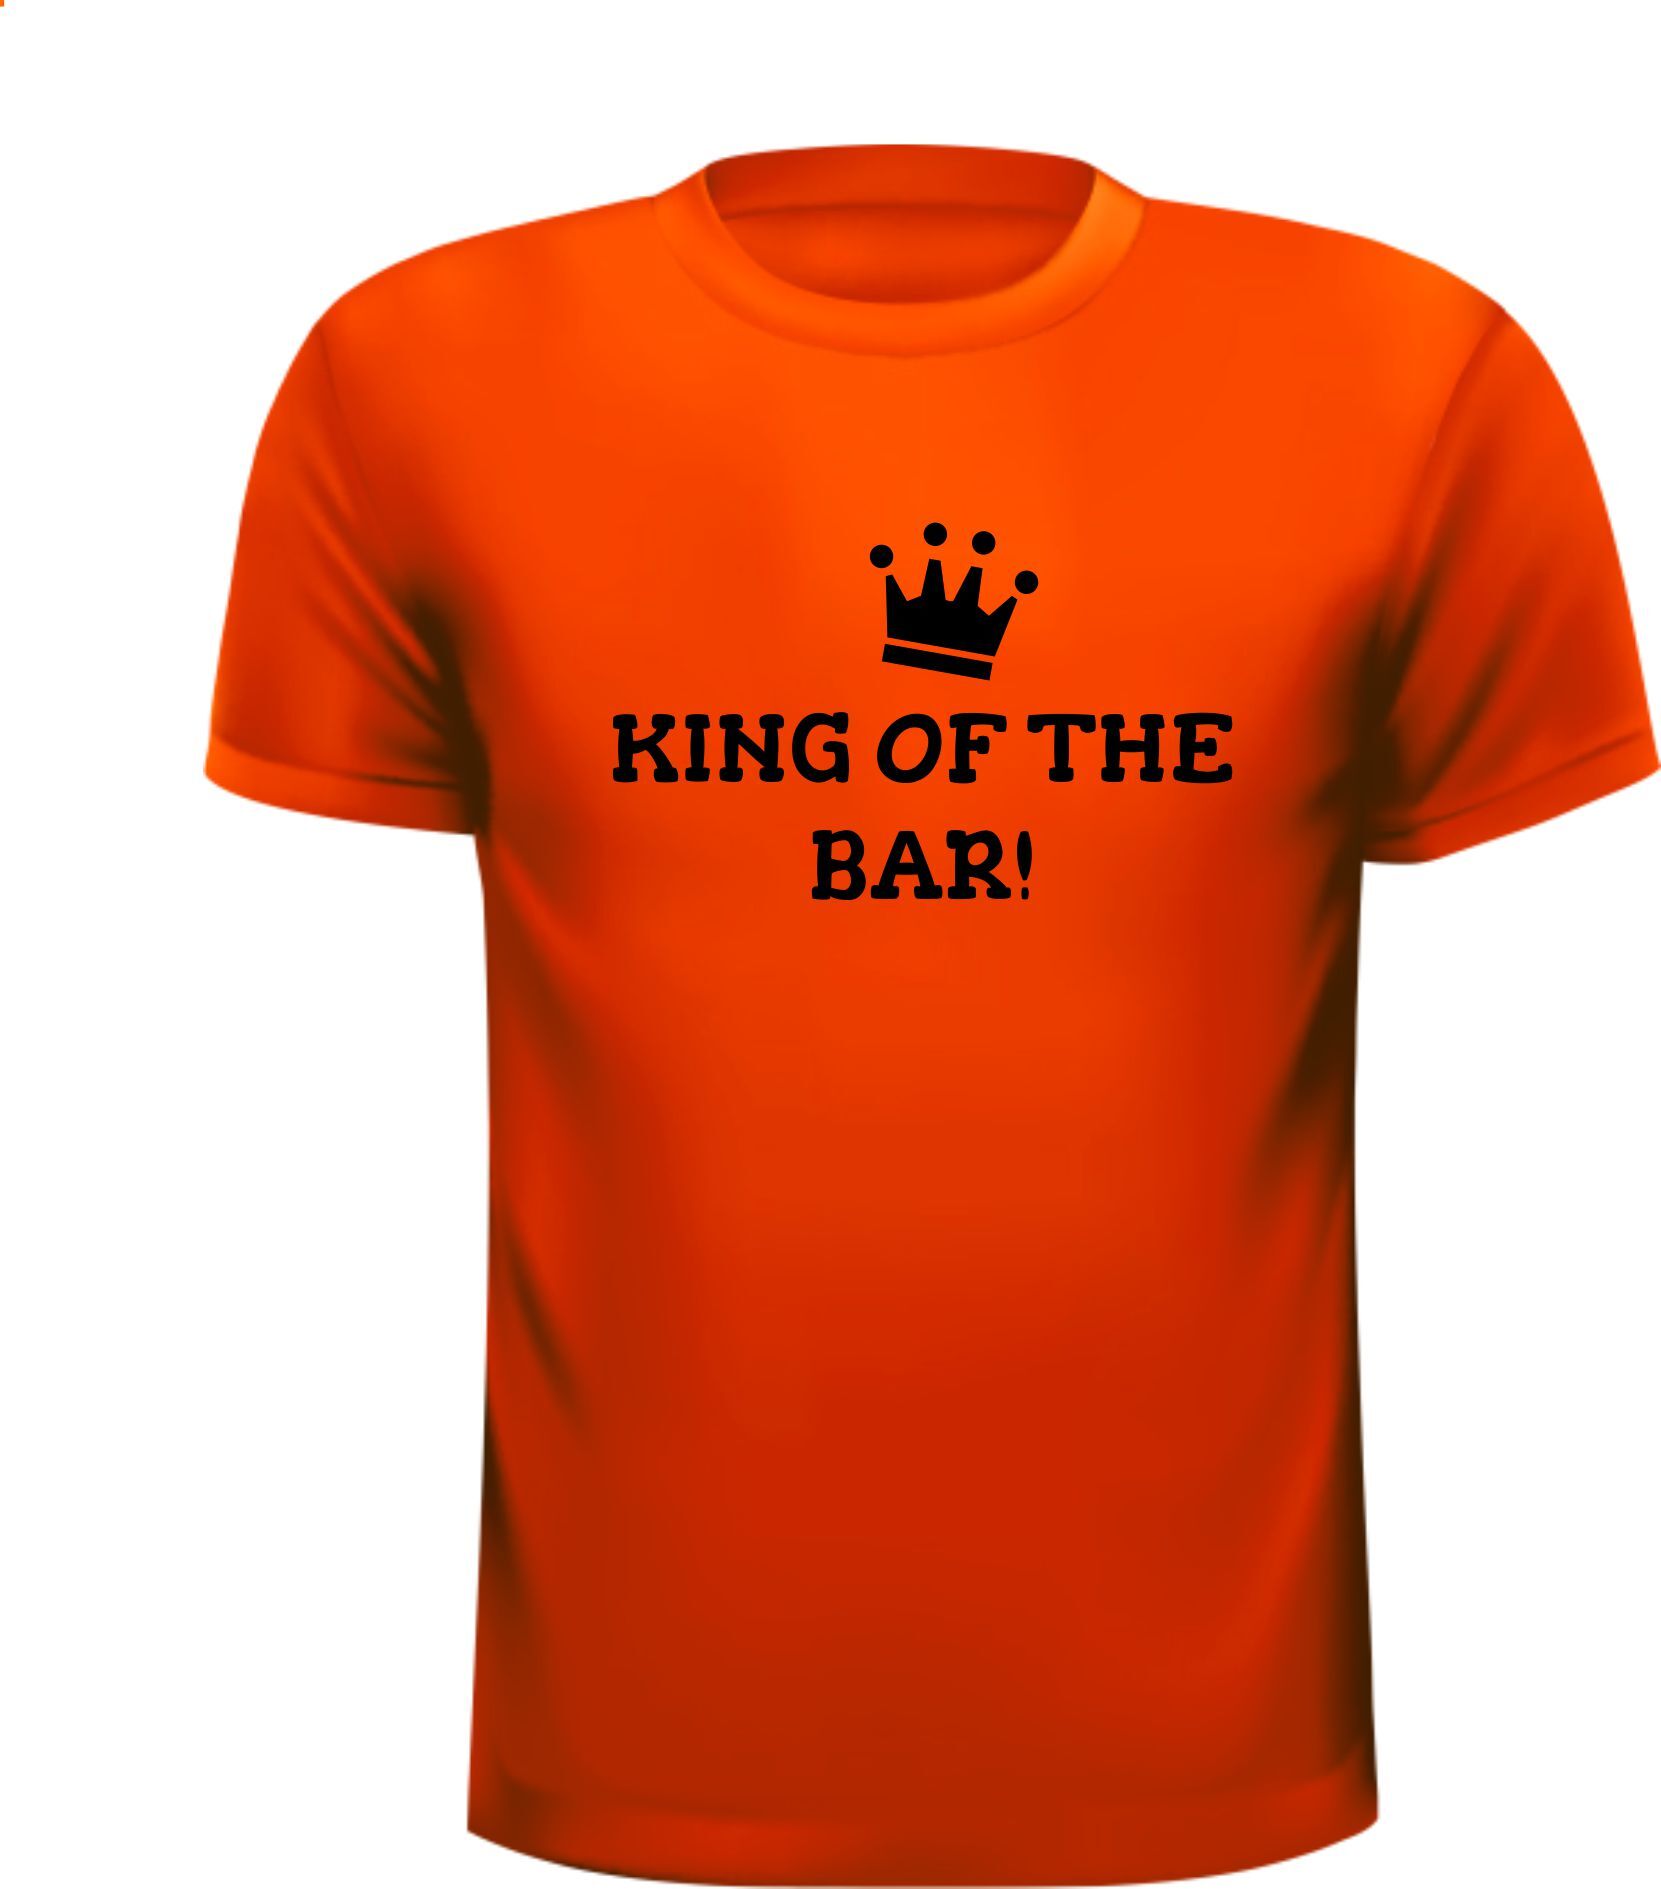 Shirtje voor Koningsdag king of the bar!